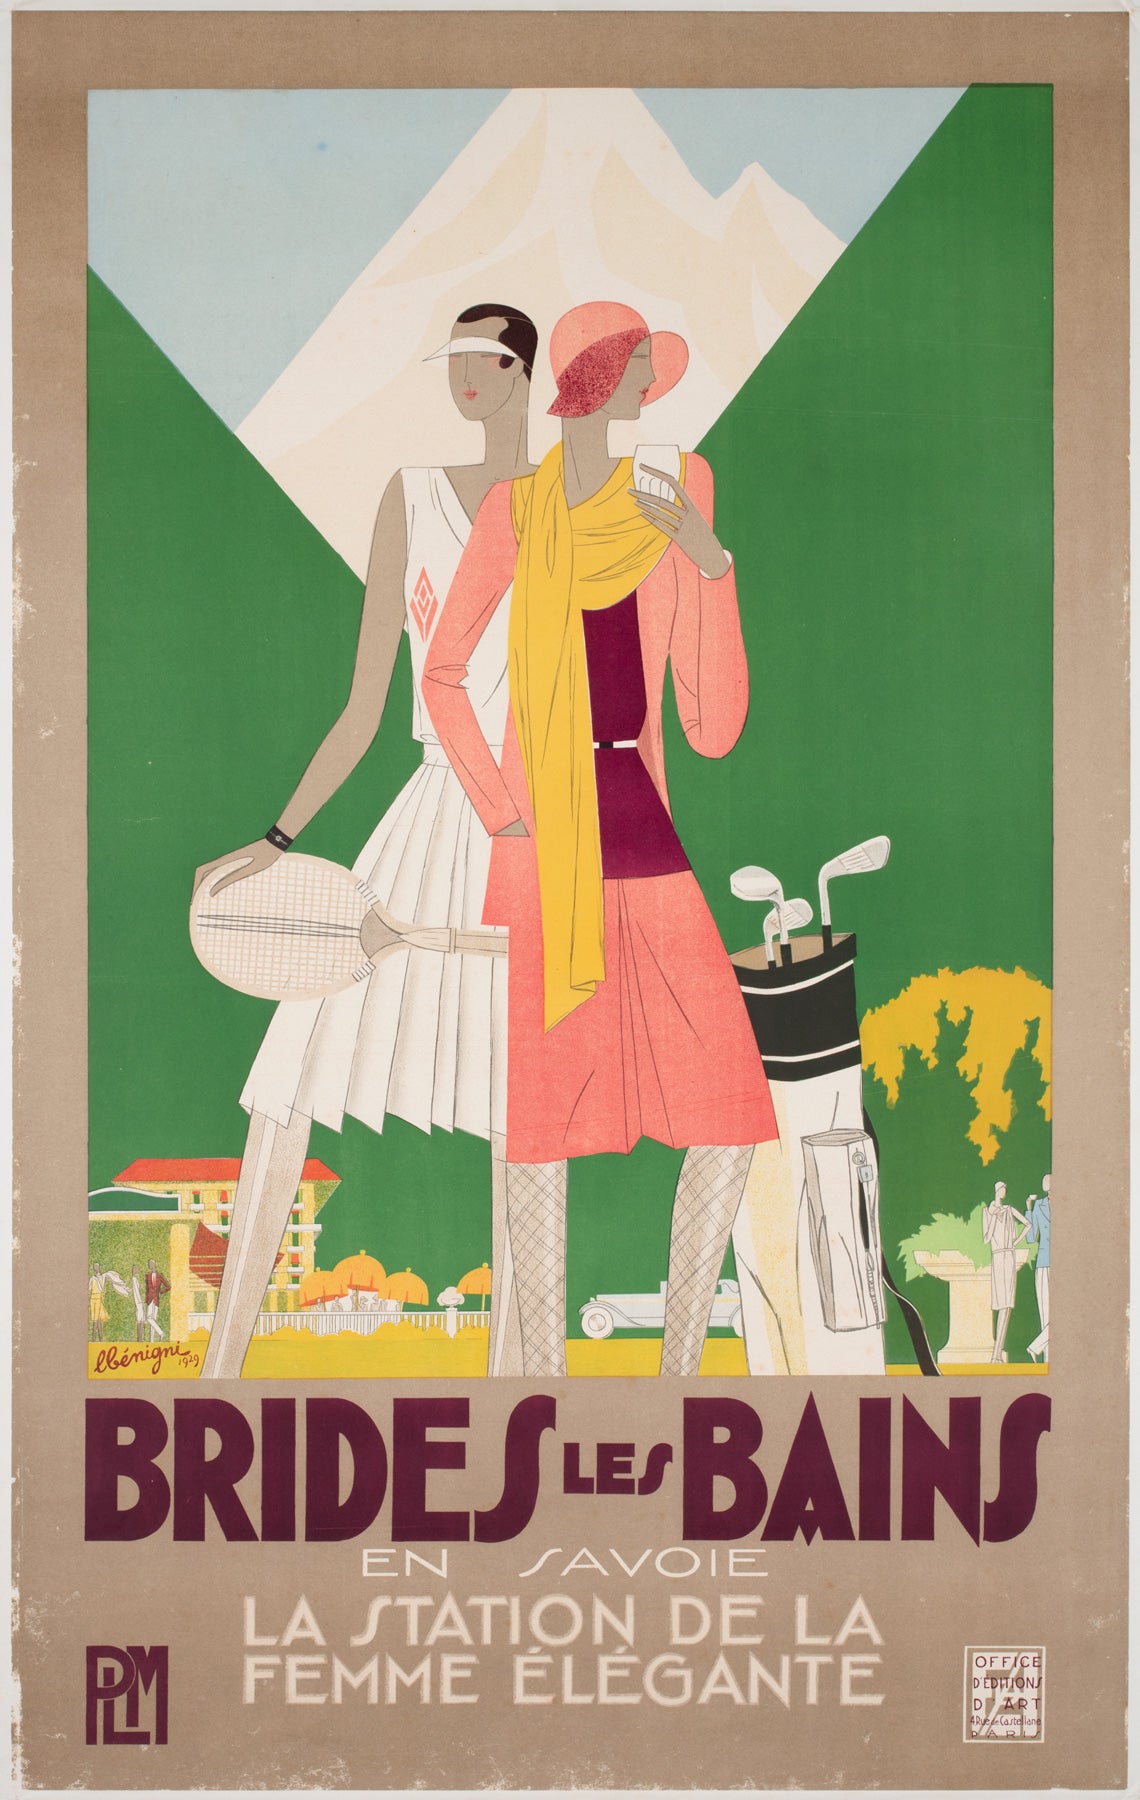 Brides les Bains 1929 French Railway Travel Advertising Poster, Leon Benigni